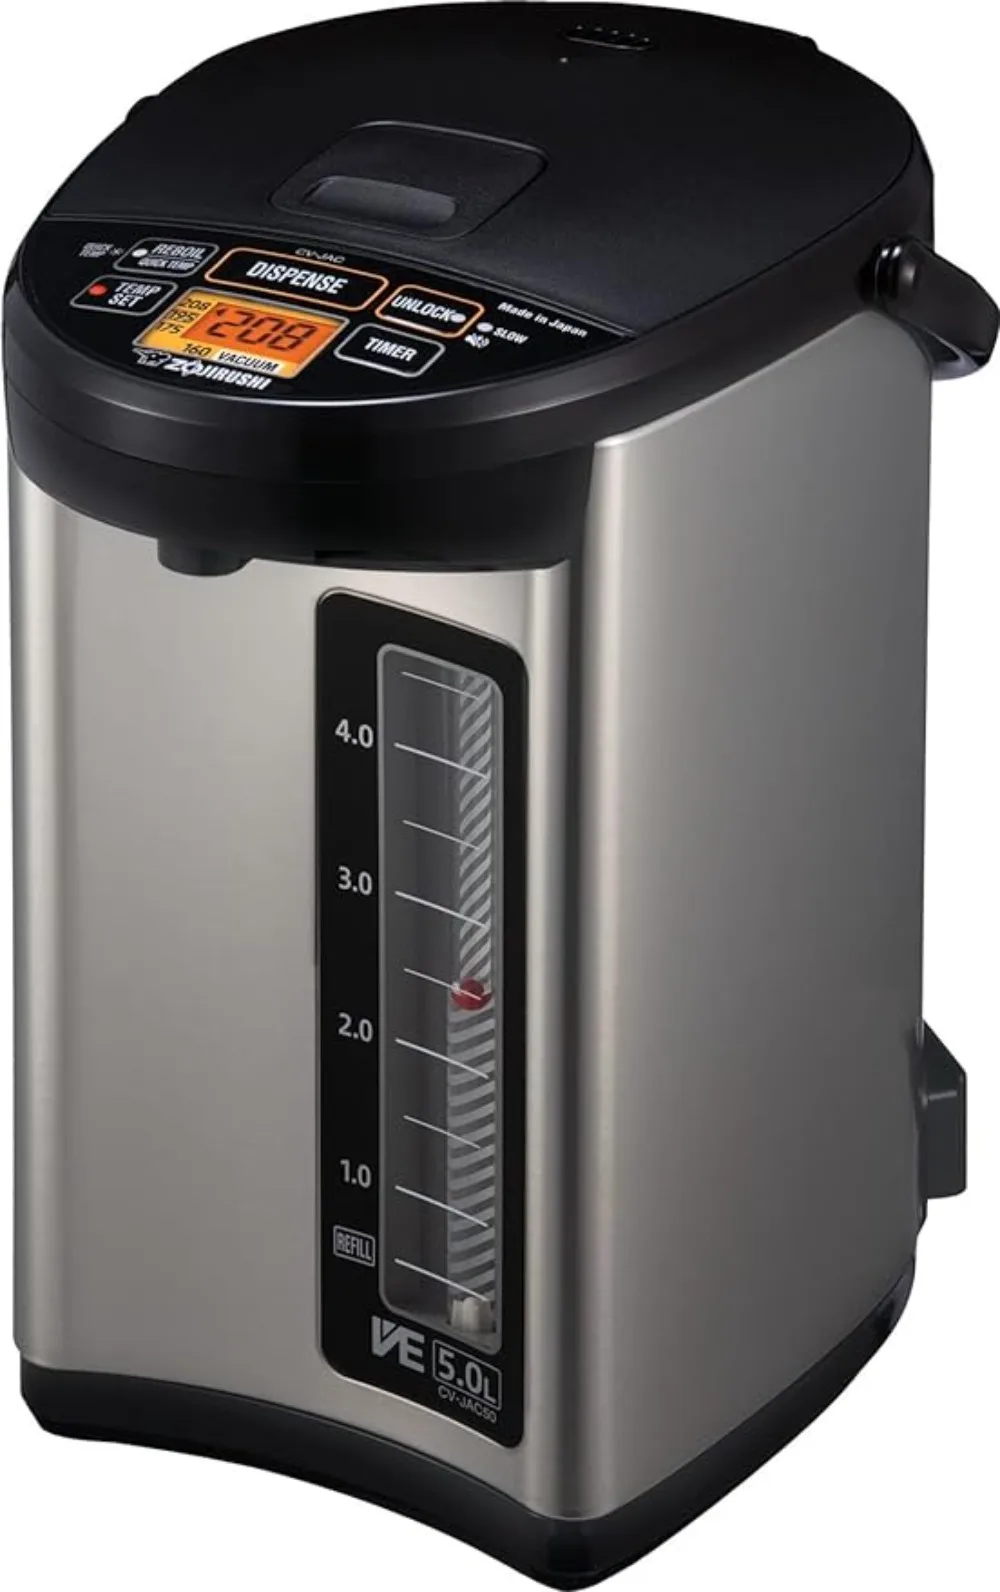 

CV-JAC50XB, VE Hybrid Water Boiler & Warmer, 5.0 Liter, Stainless Black, Made in Japan